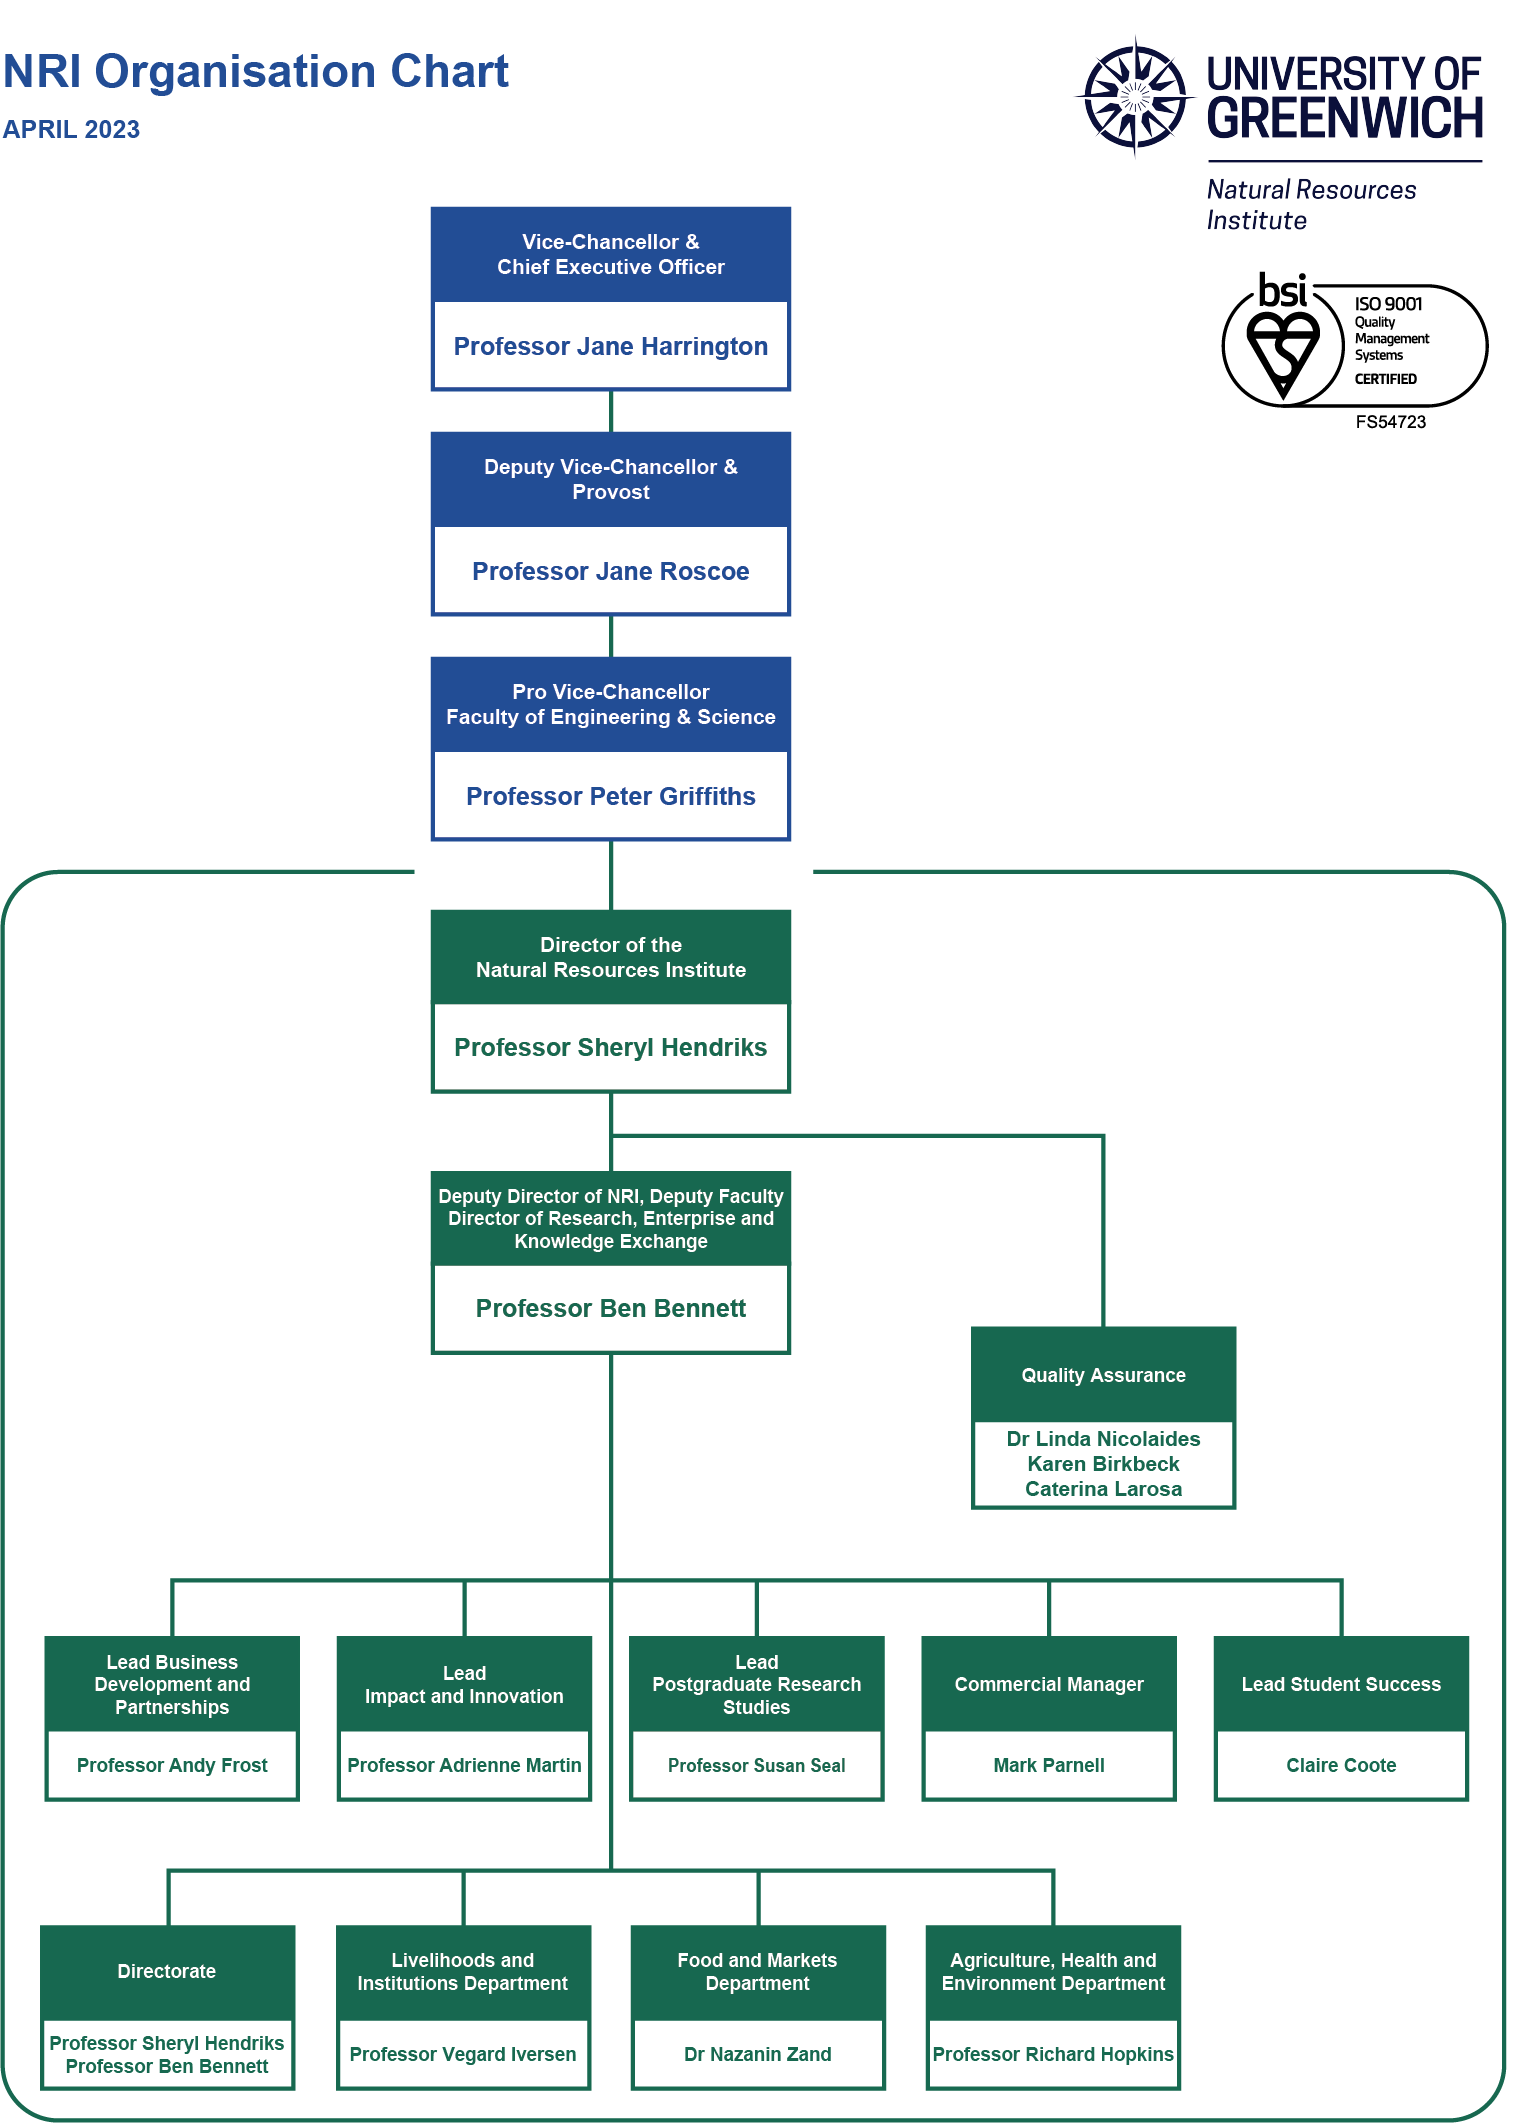 NRI Organisation Chart March 2023